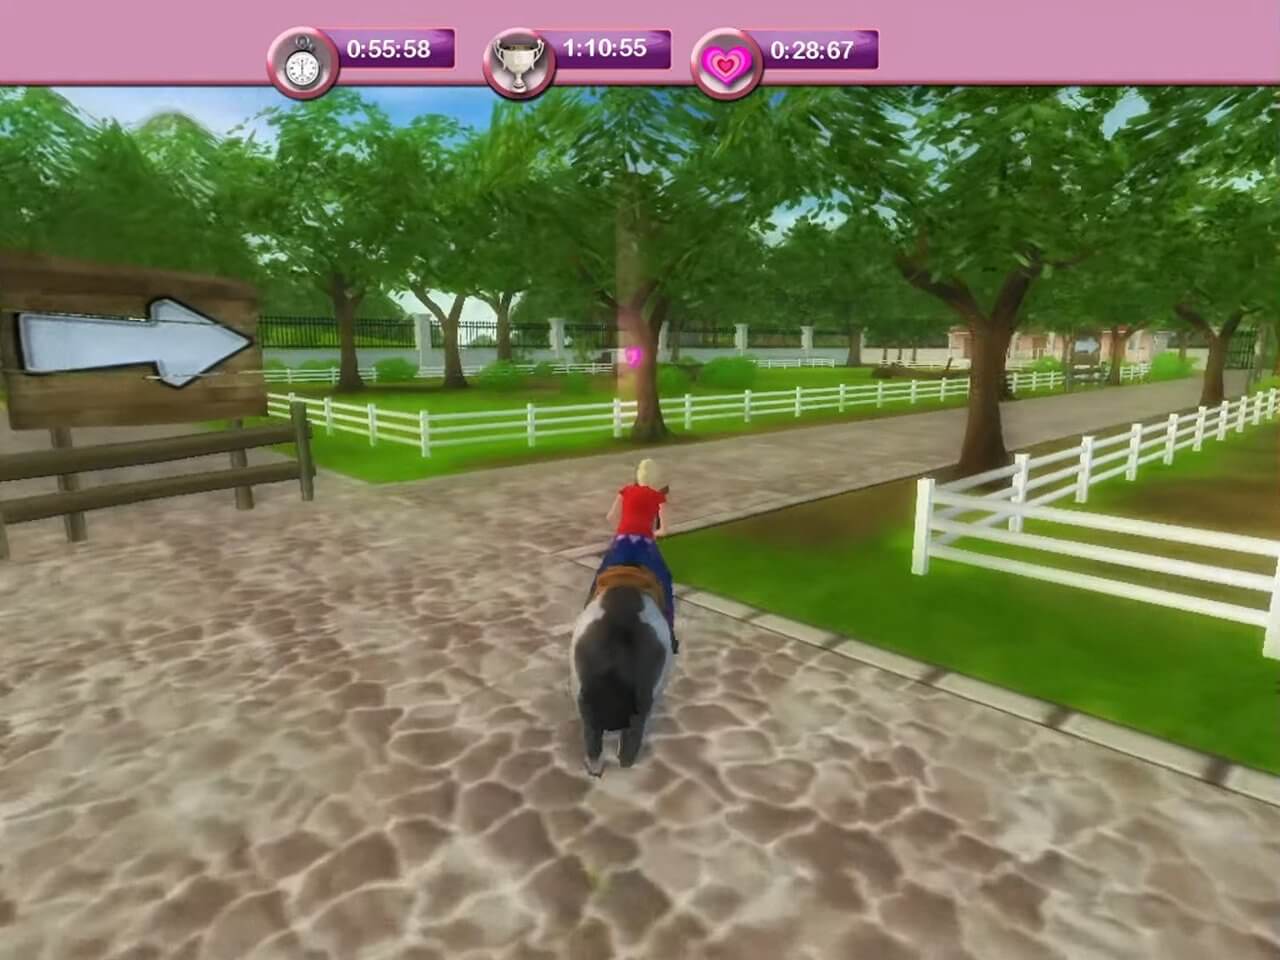 Jogo Barbie - Horse Adventures - Riding Camp - Playstation 2